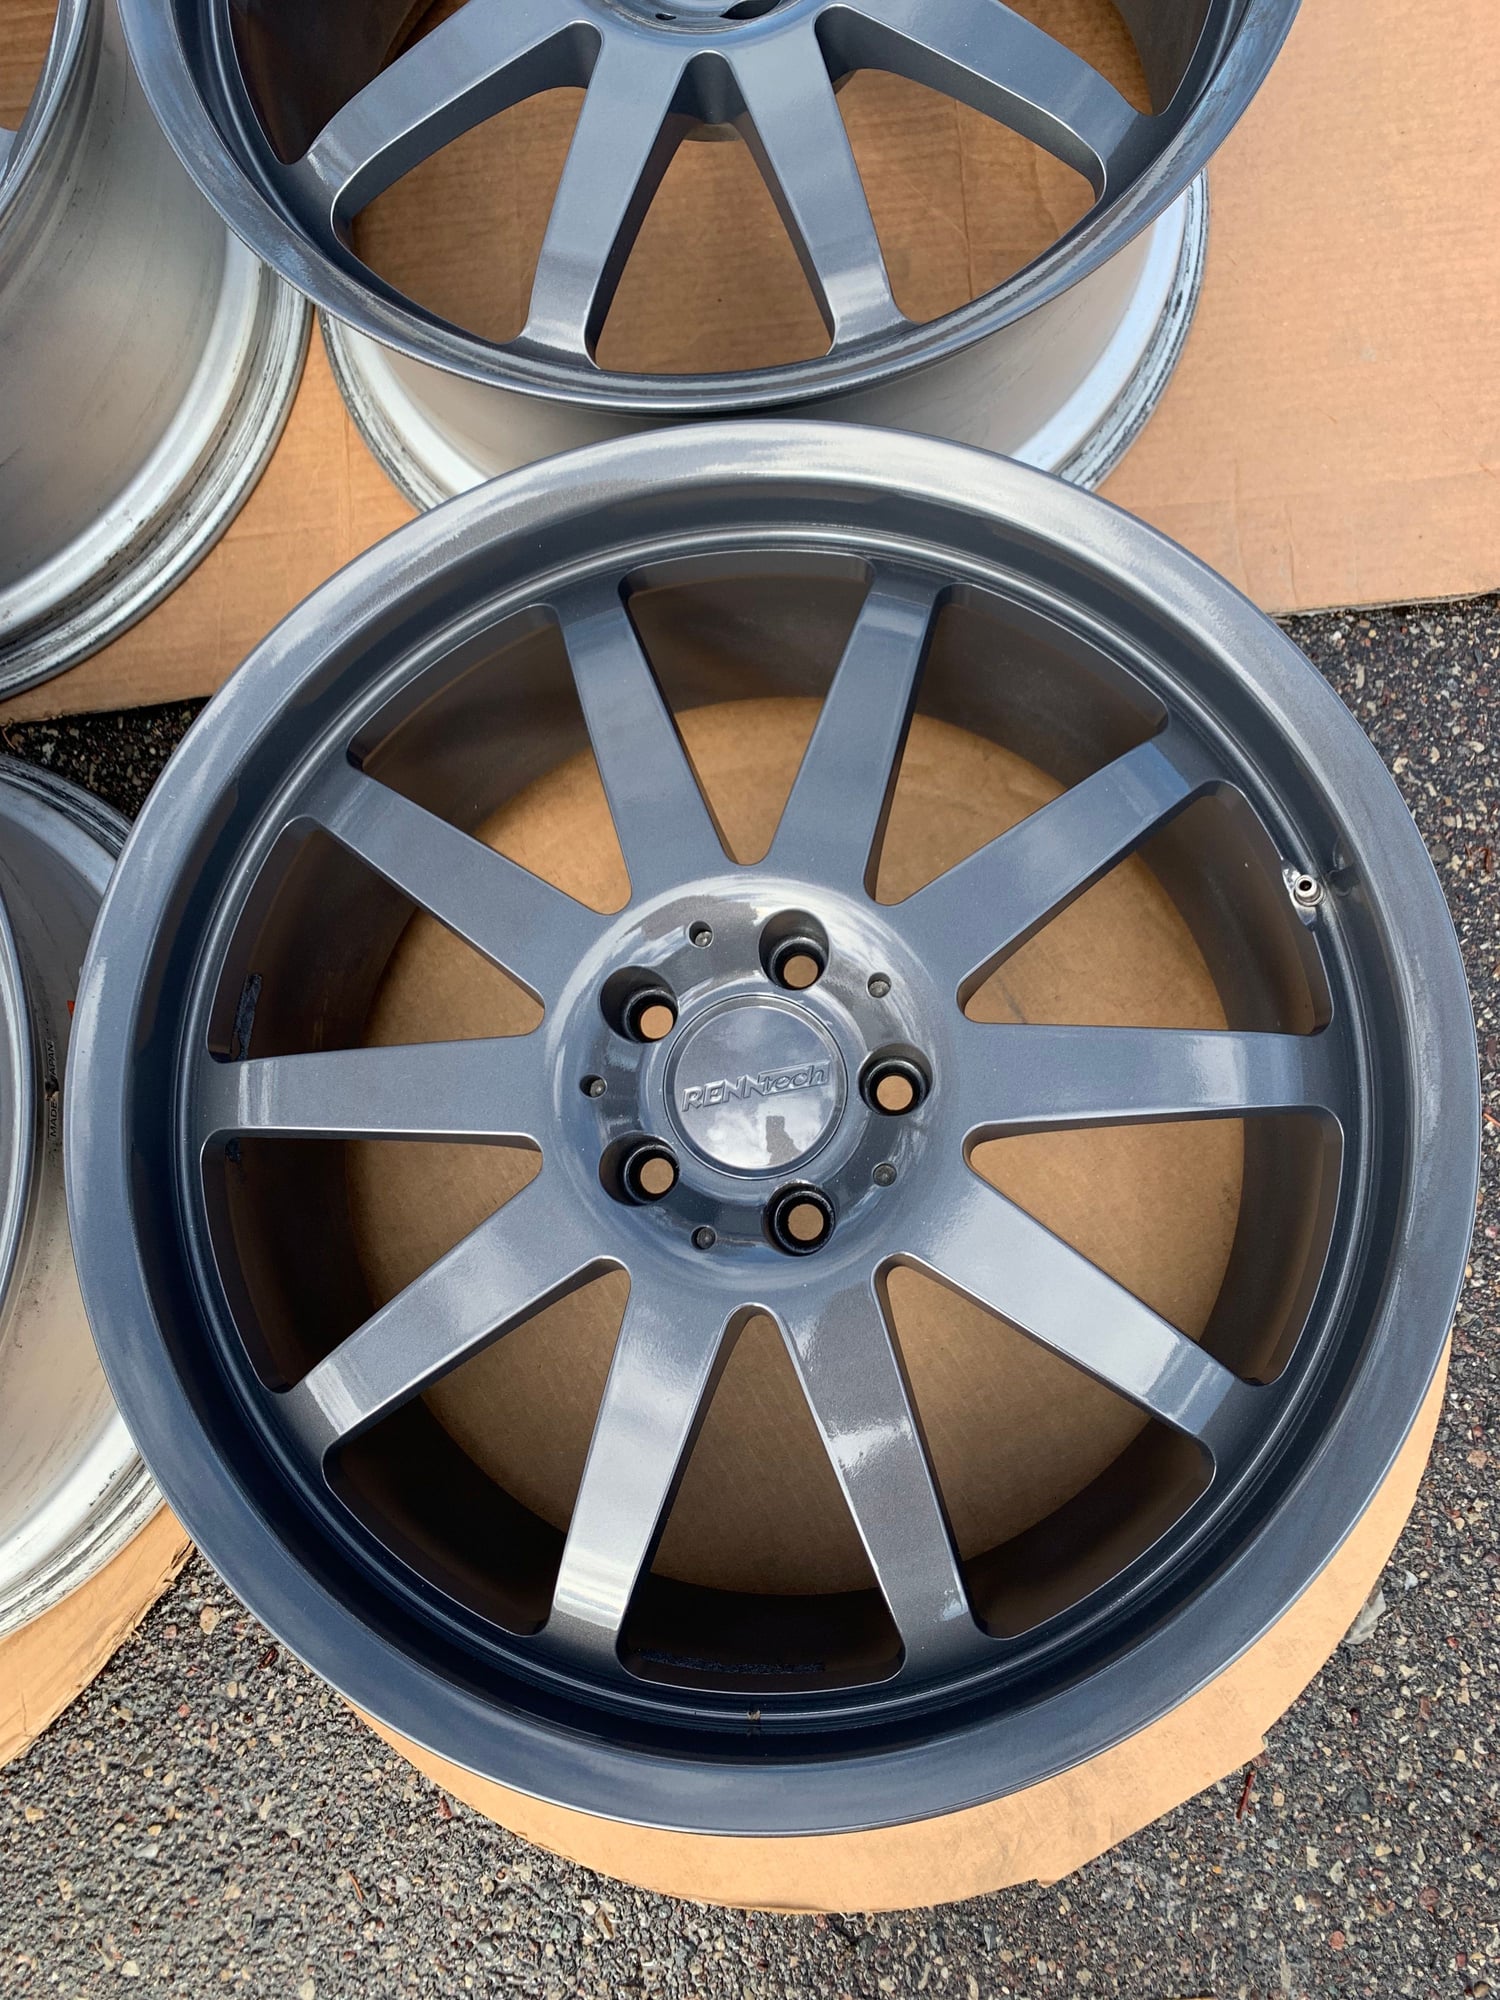 Wheels and Tires/Axles - Rare 19" Renntech Monolite Forged Wheels (1 Piece) - 19x9 +39 - Tesla Gray - Used - 2011 to 2017 Mercedes-Benz ML63 AMG - Minneapolis, MN 55447, United States